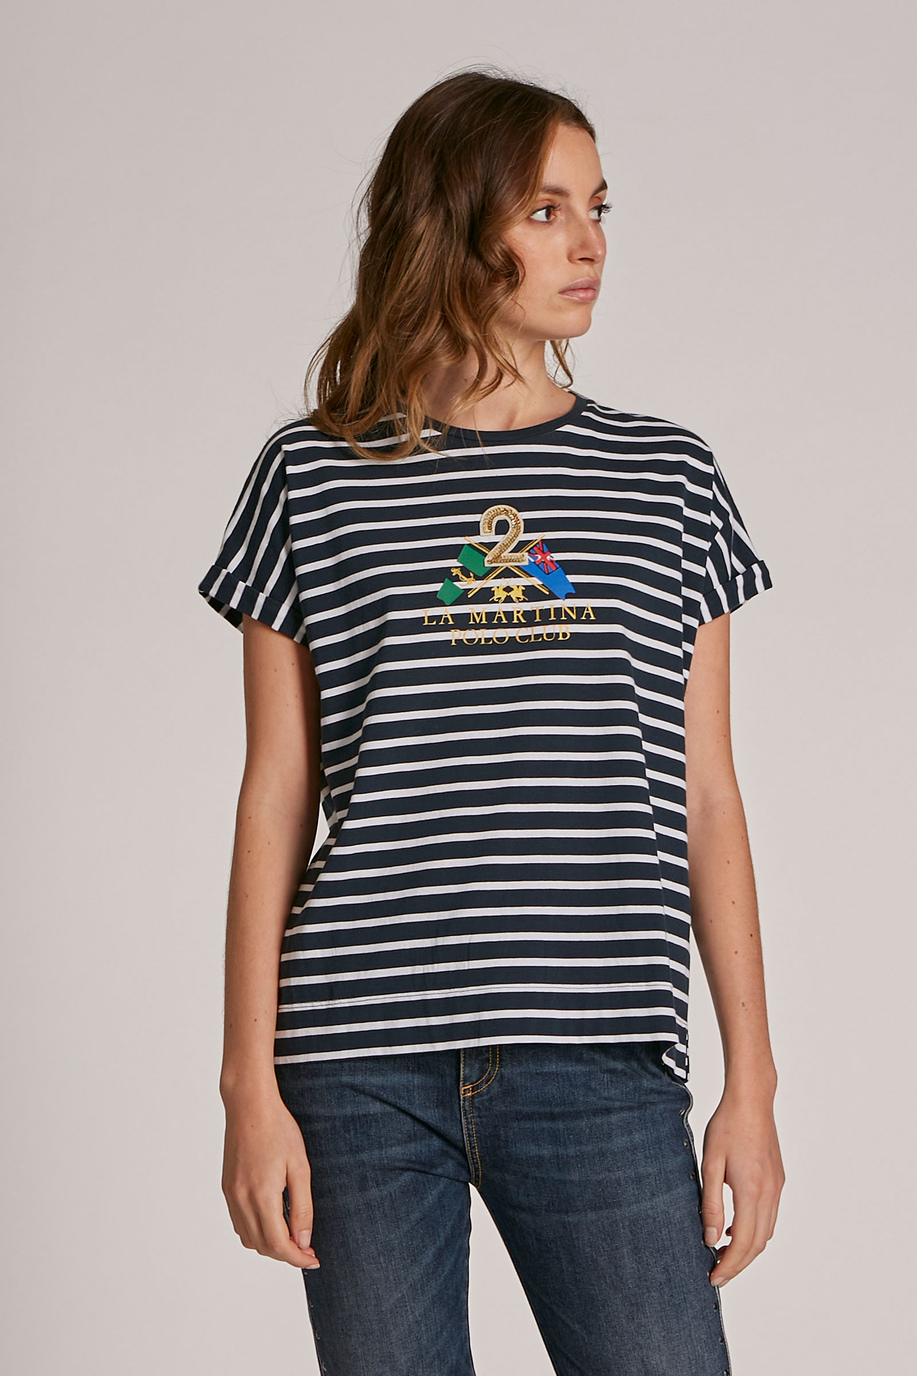 Damen-T-Shirt aus Baumwolle mit Logo, oversized Modell - T-shirts | La Martina - Official Online Shop